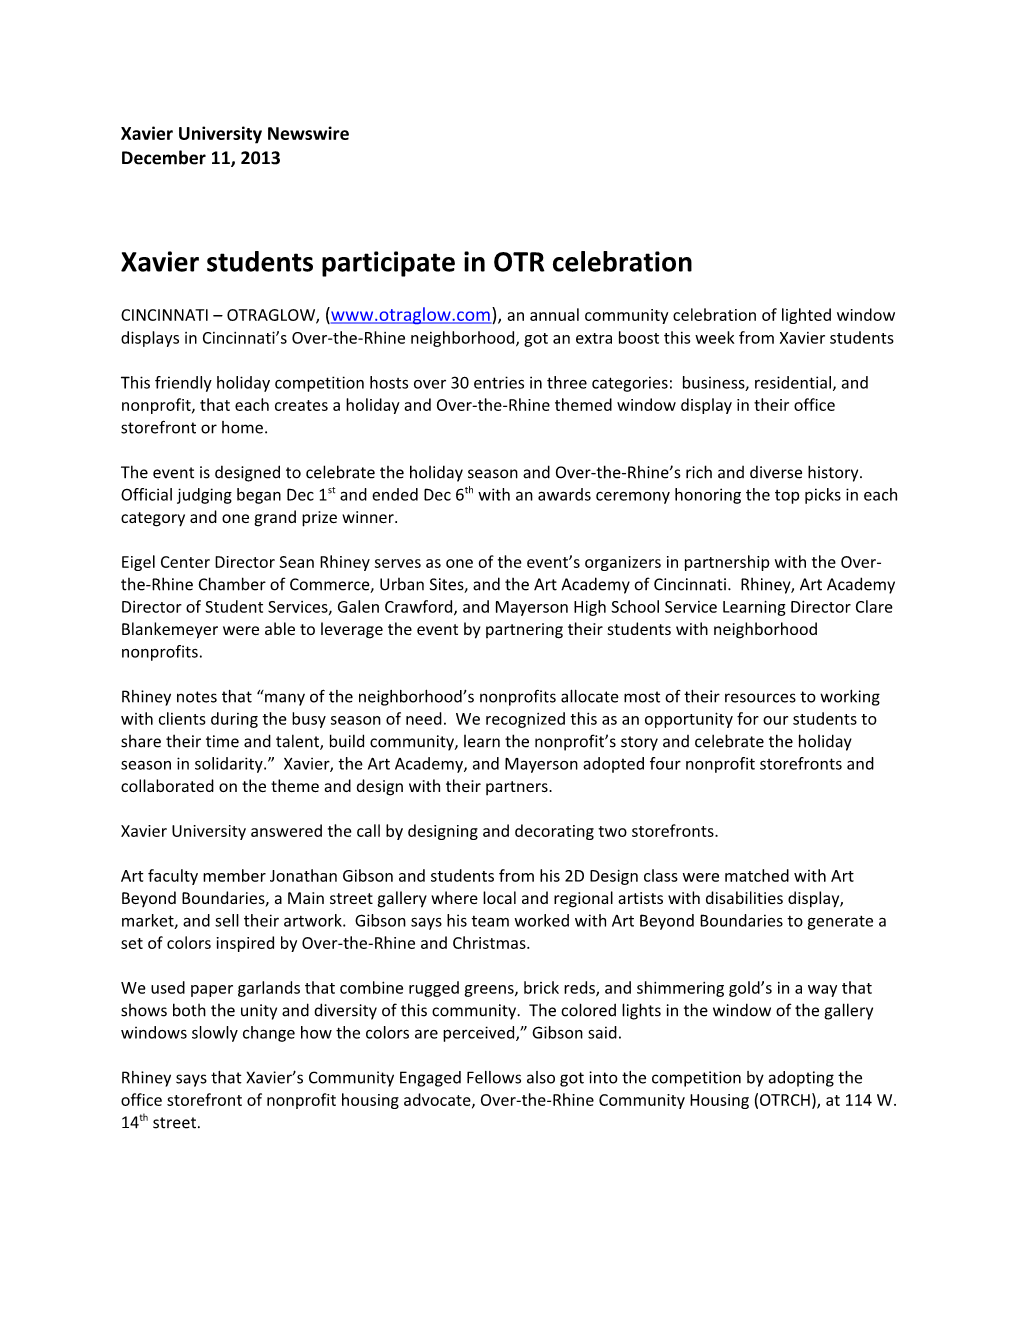 Xavier Students Participate in OTR Celebration